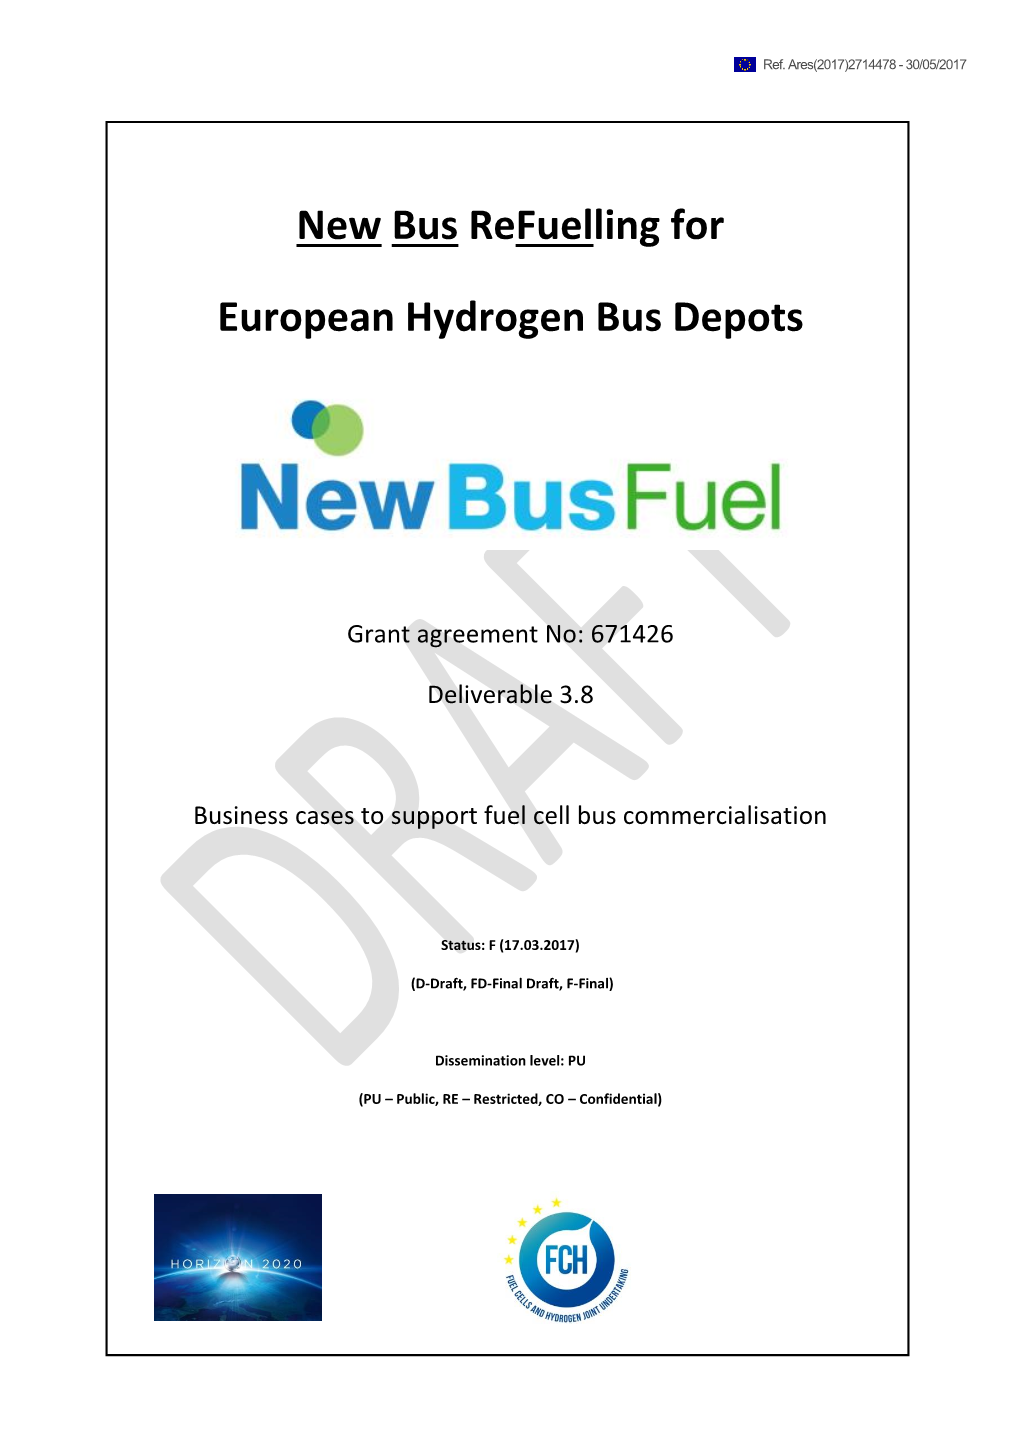 New Bus Refuelling for European Hydrogen Bus Depots